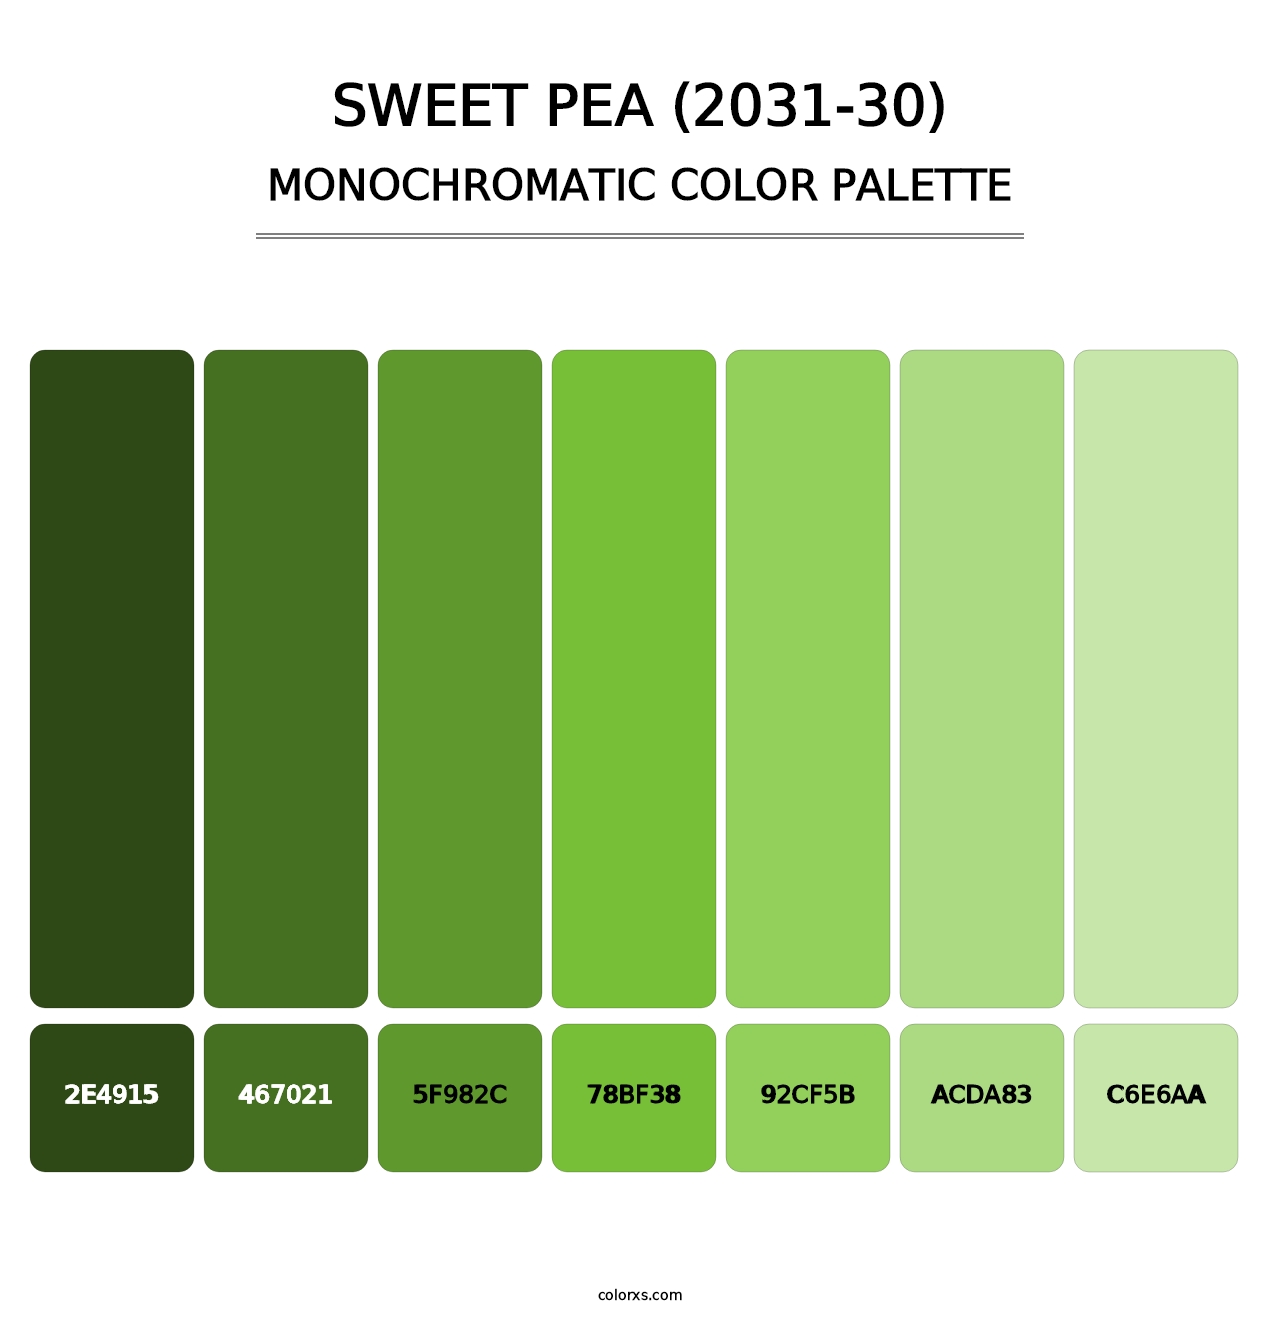 Sweet Pea (2031-30) - Monochromatic Color Palette